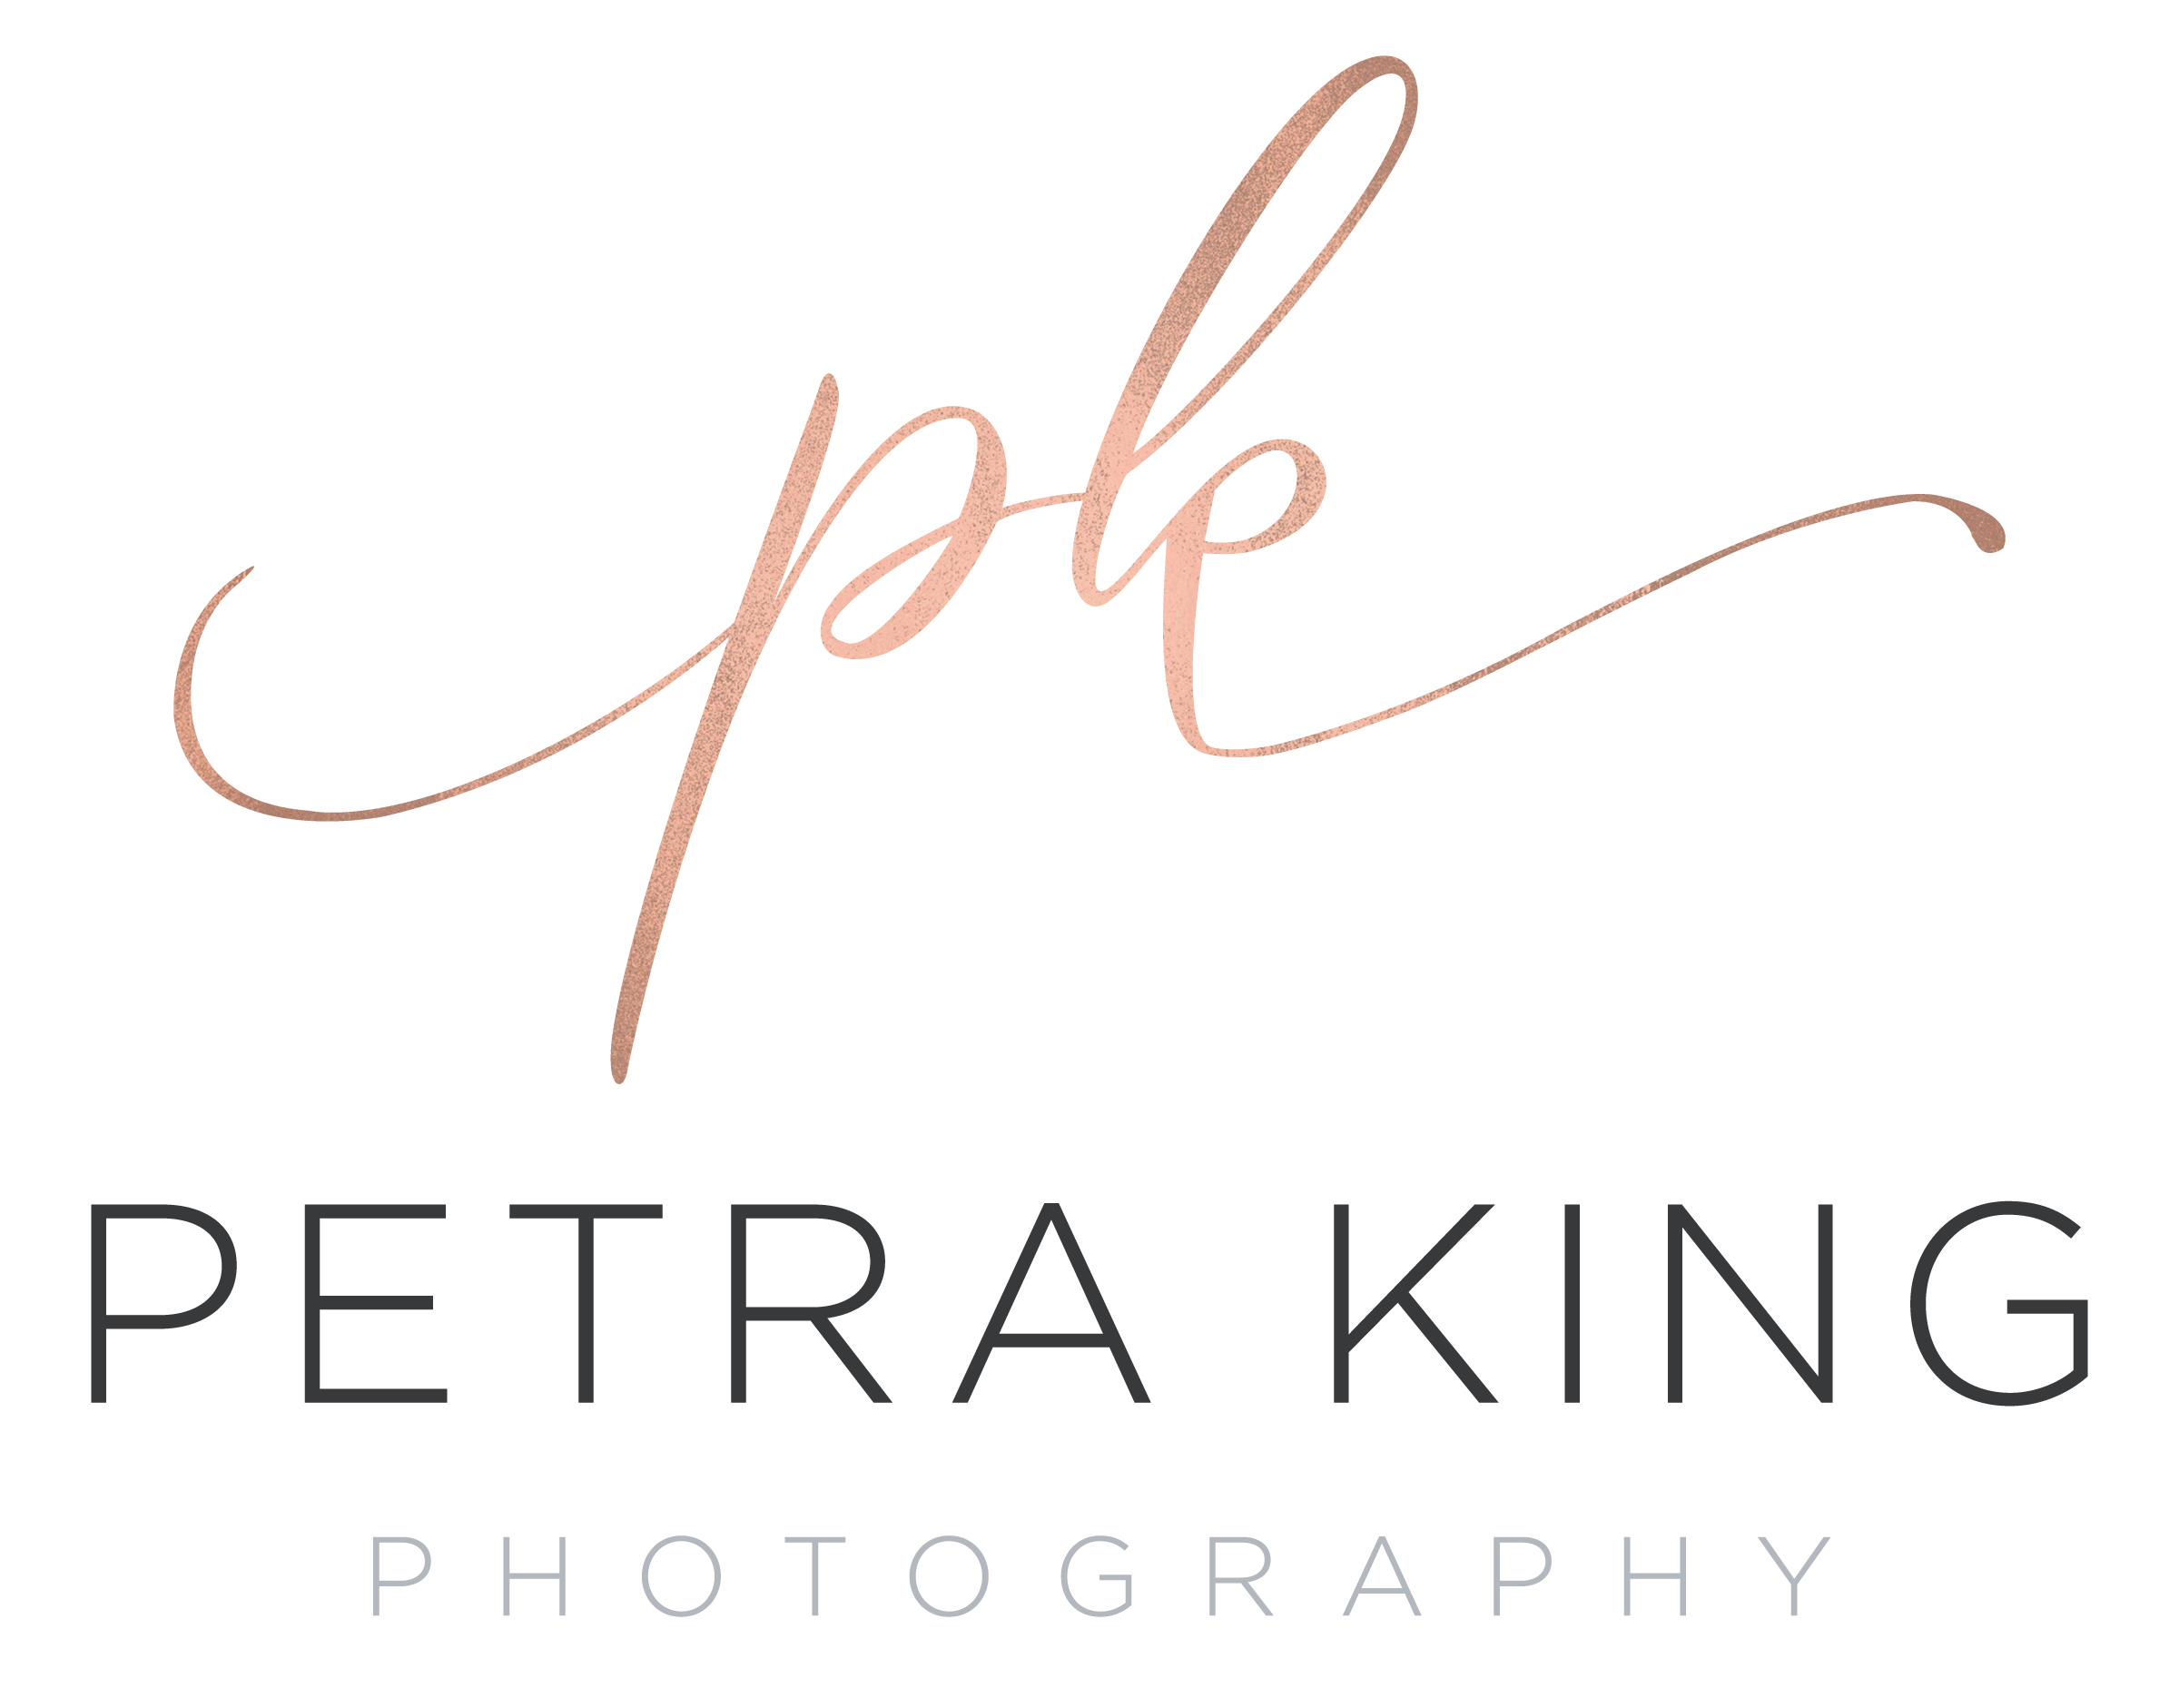 Petra King Photography